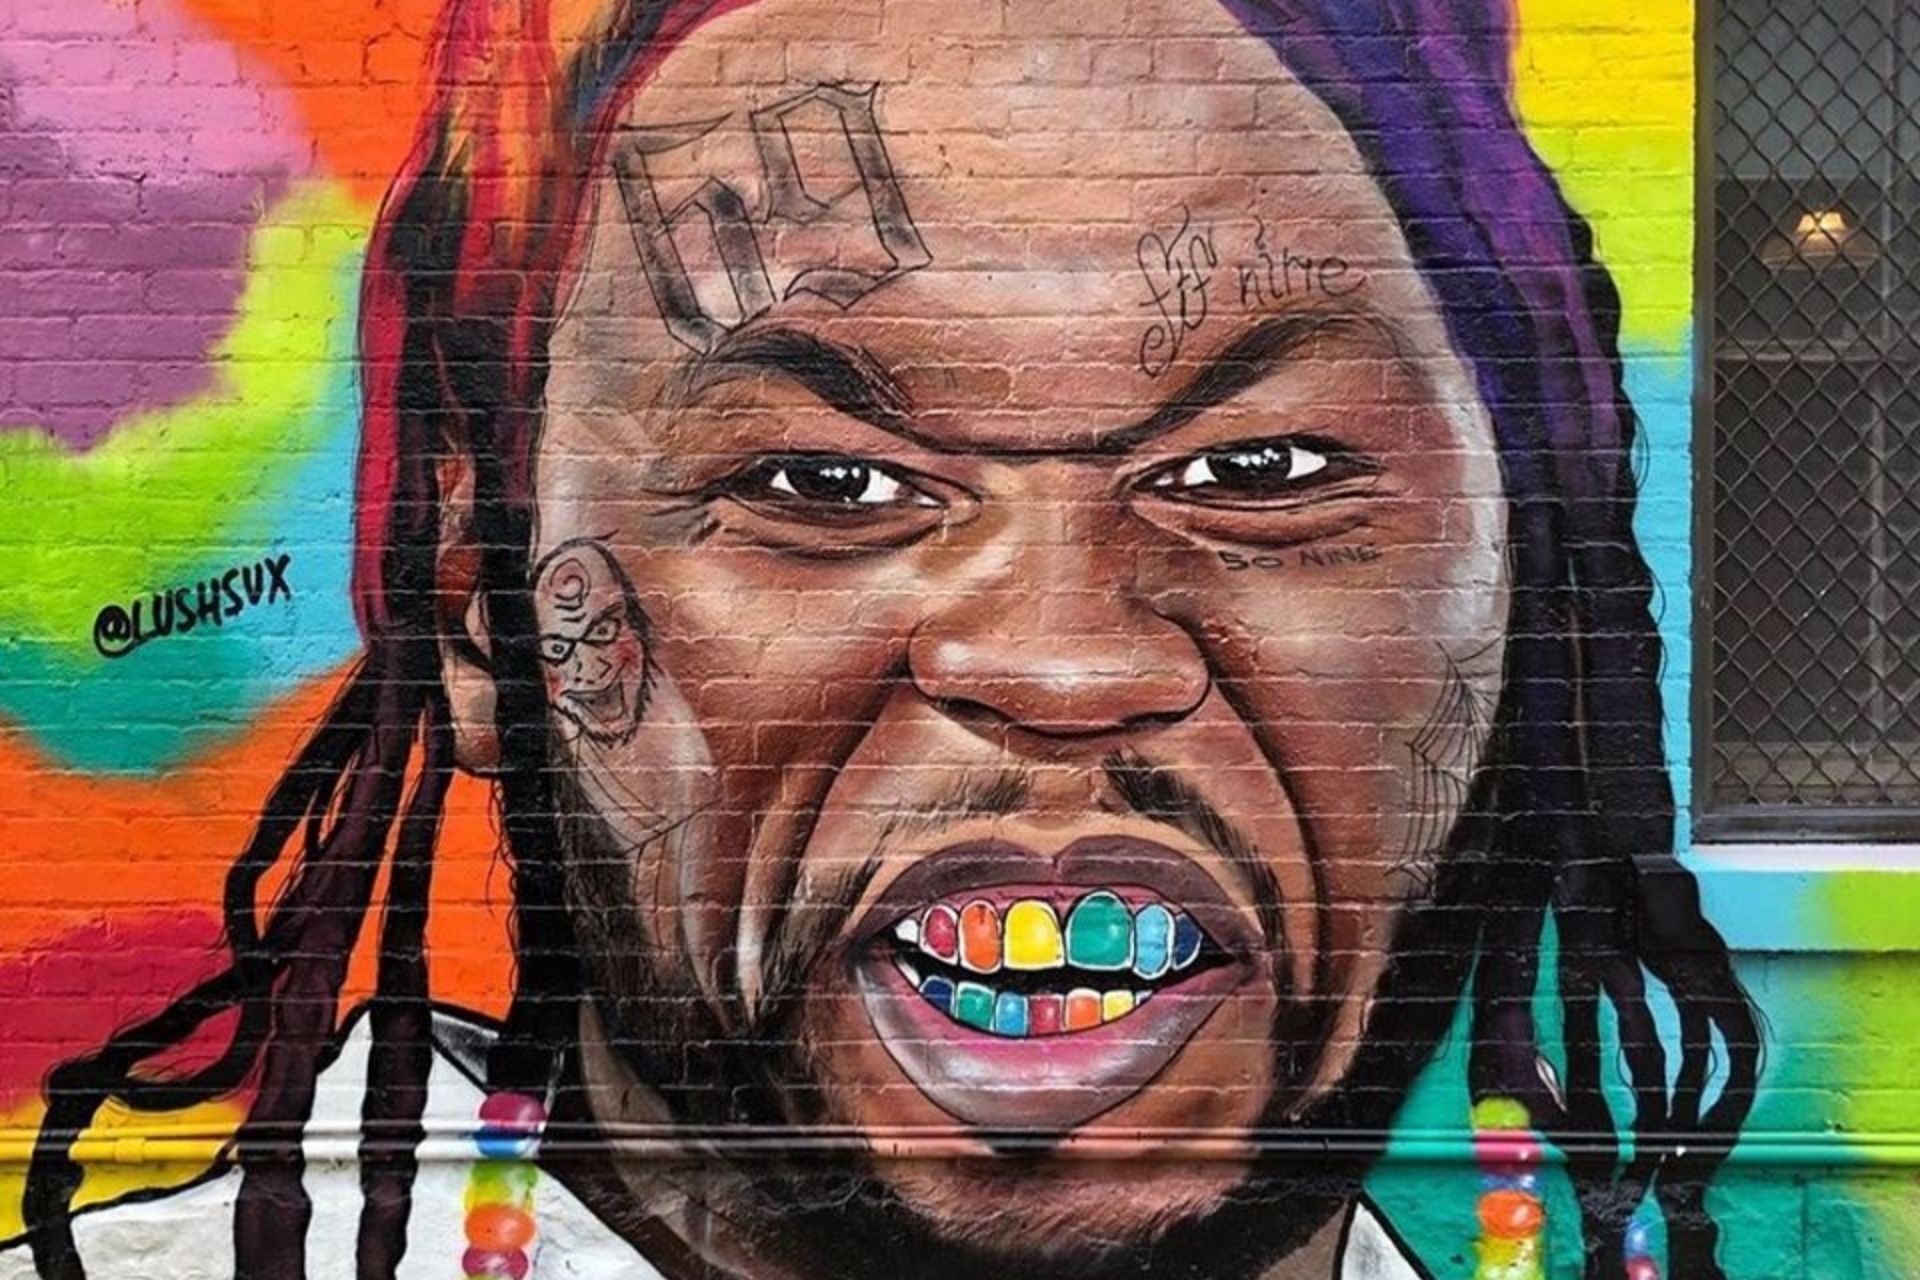 Aussie Graffiti Artist Lush Sux Is Trolling 50 Cent With Huge Murals Gq